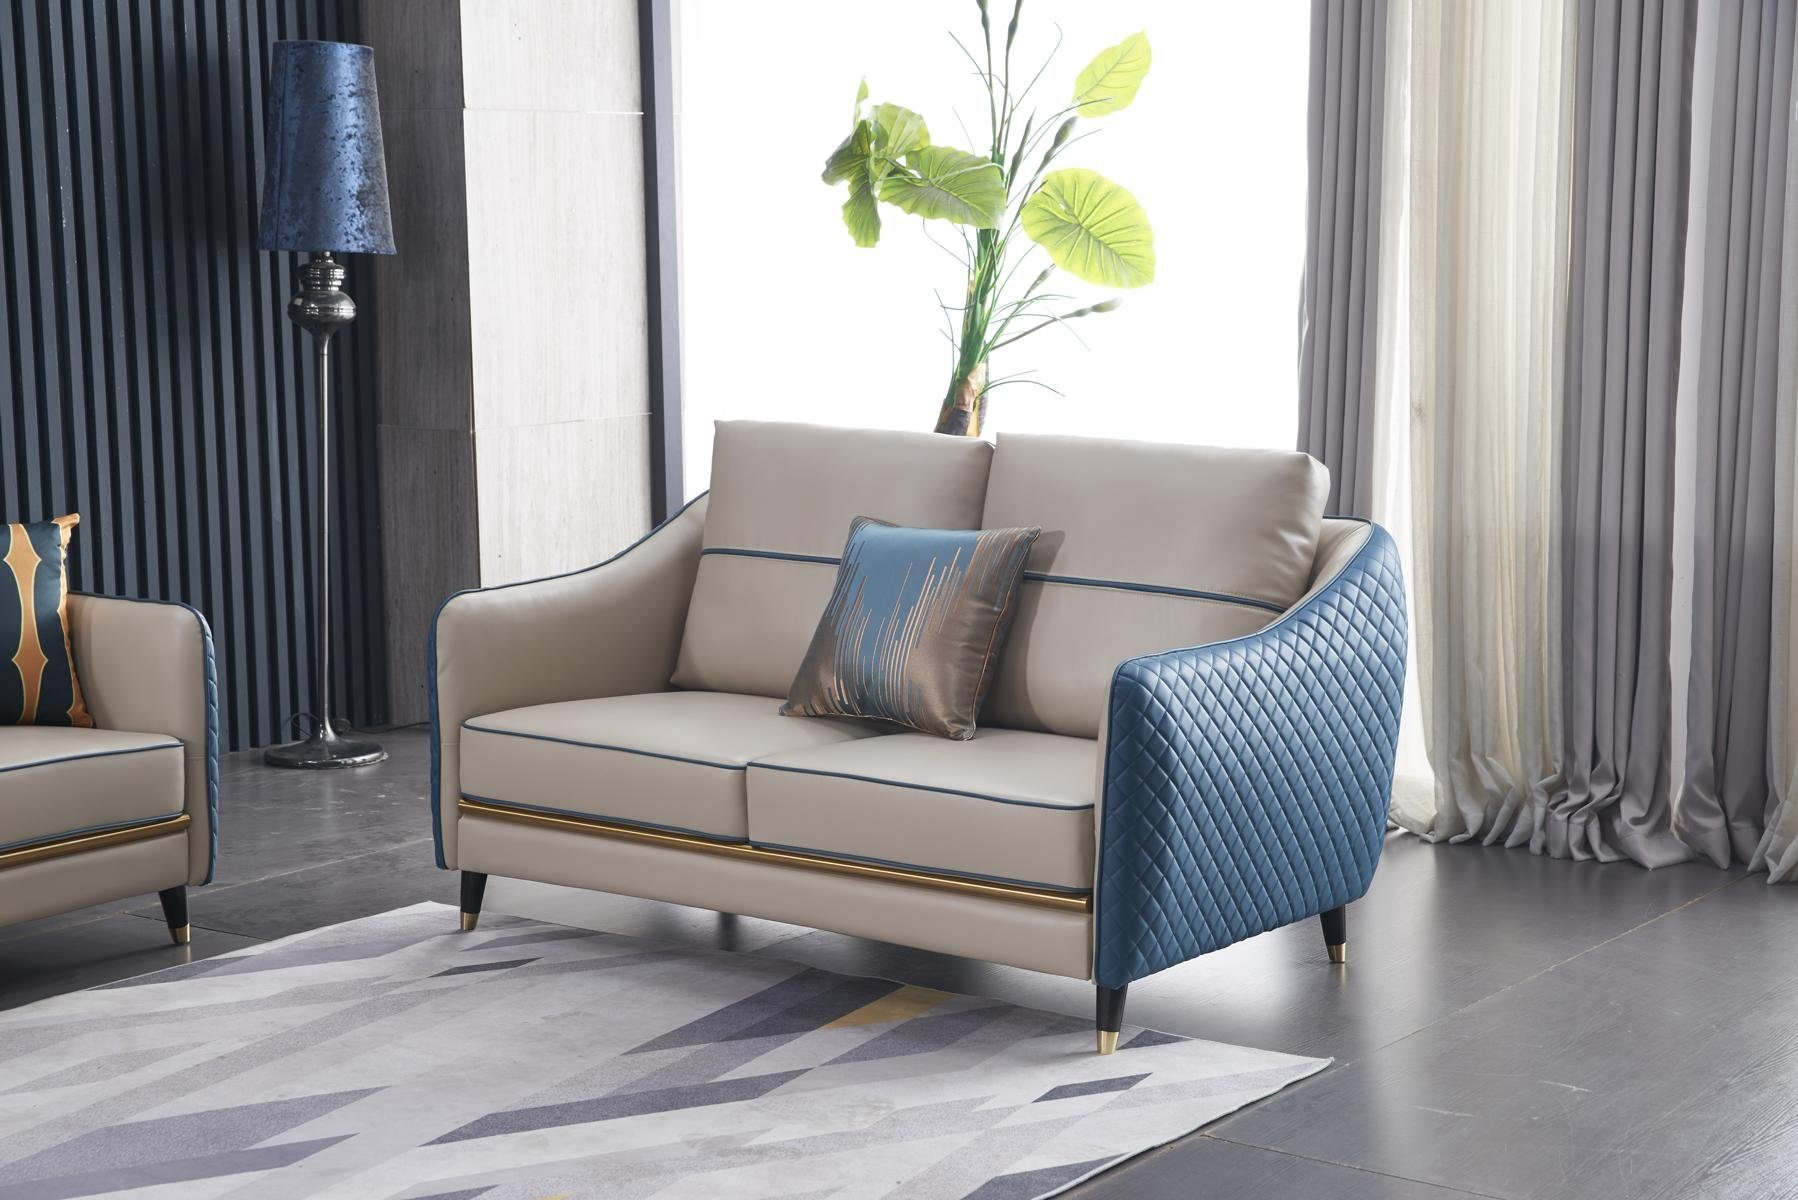 JVmoebel Sofa Sofa 2 Sitzer Design Sofas Polster Couchen Relax Modern, Made in Europe